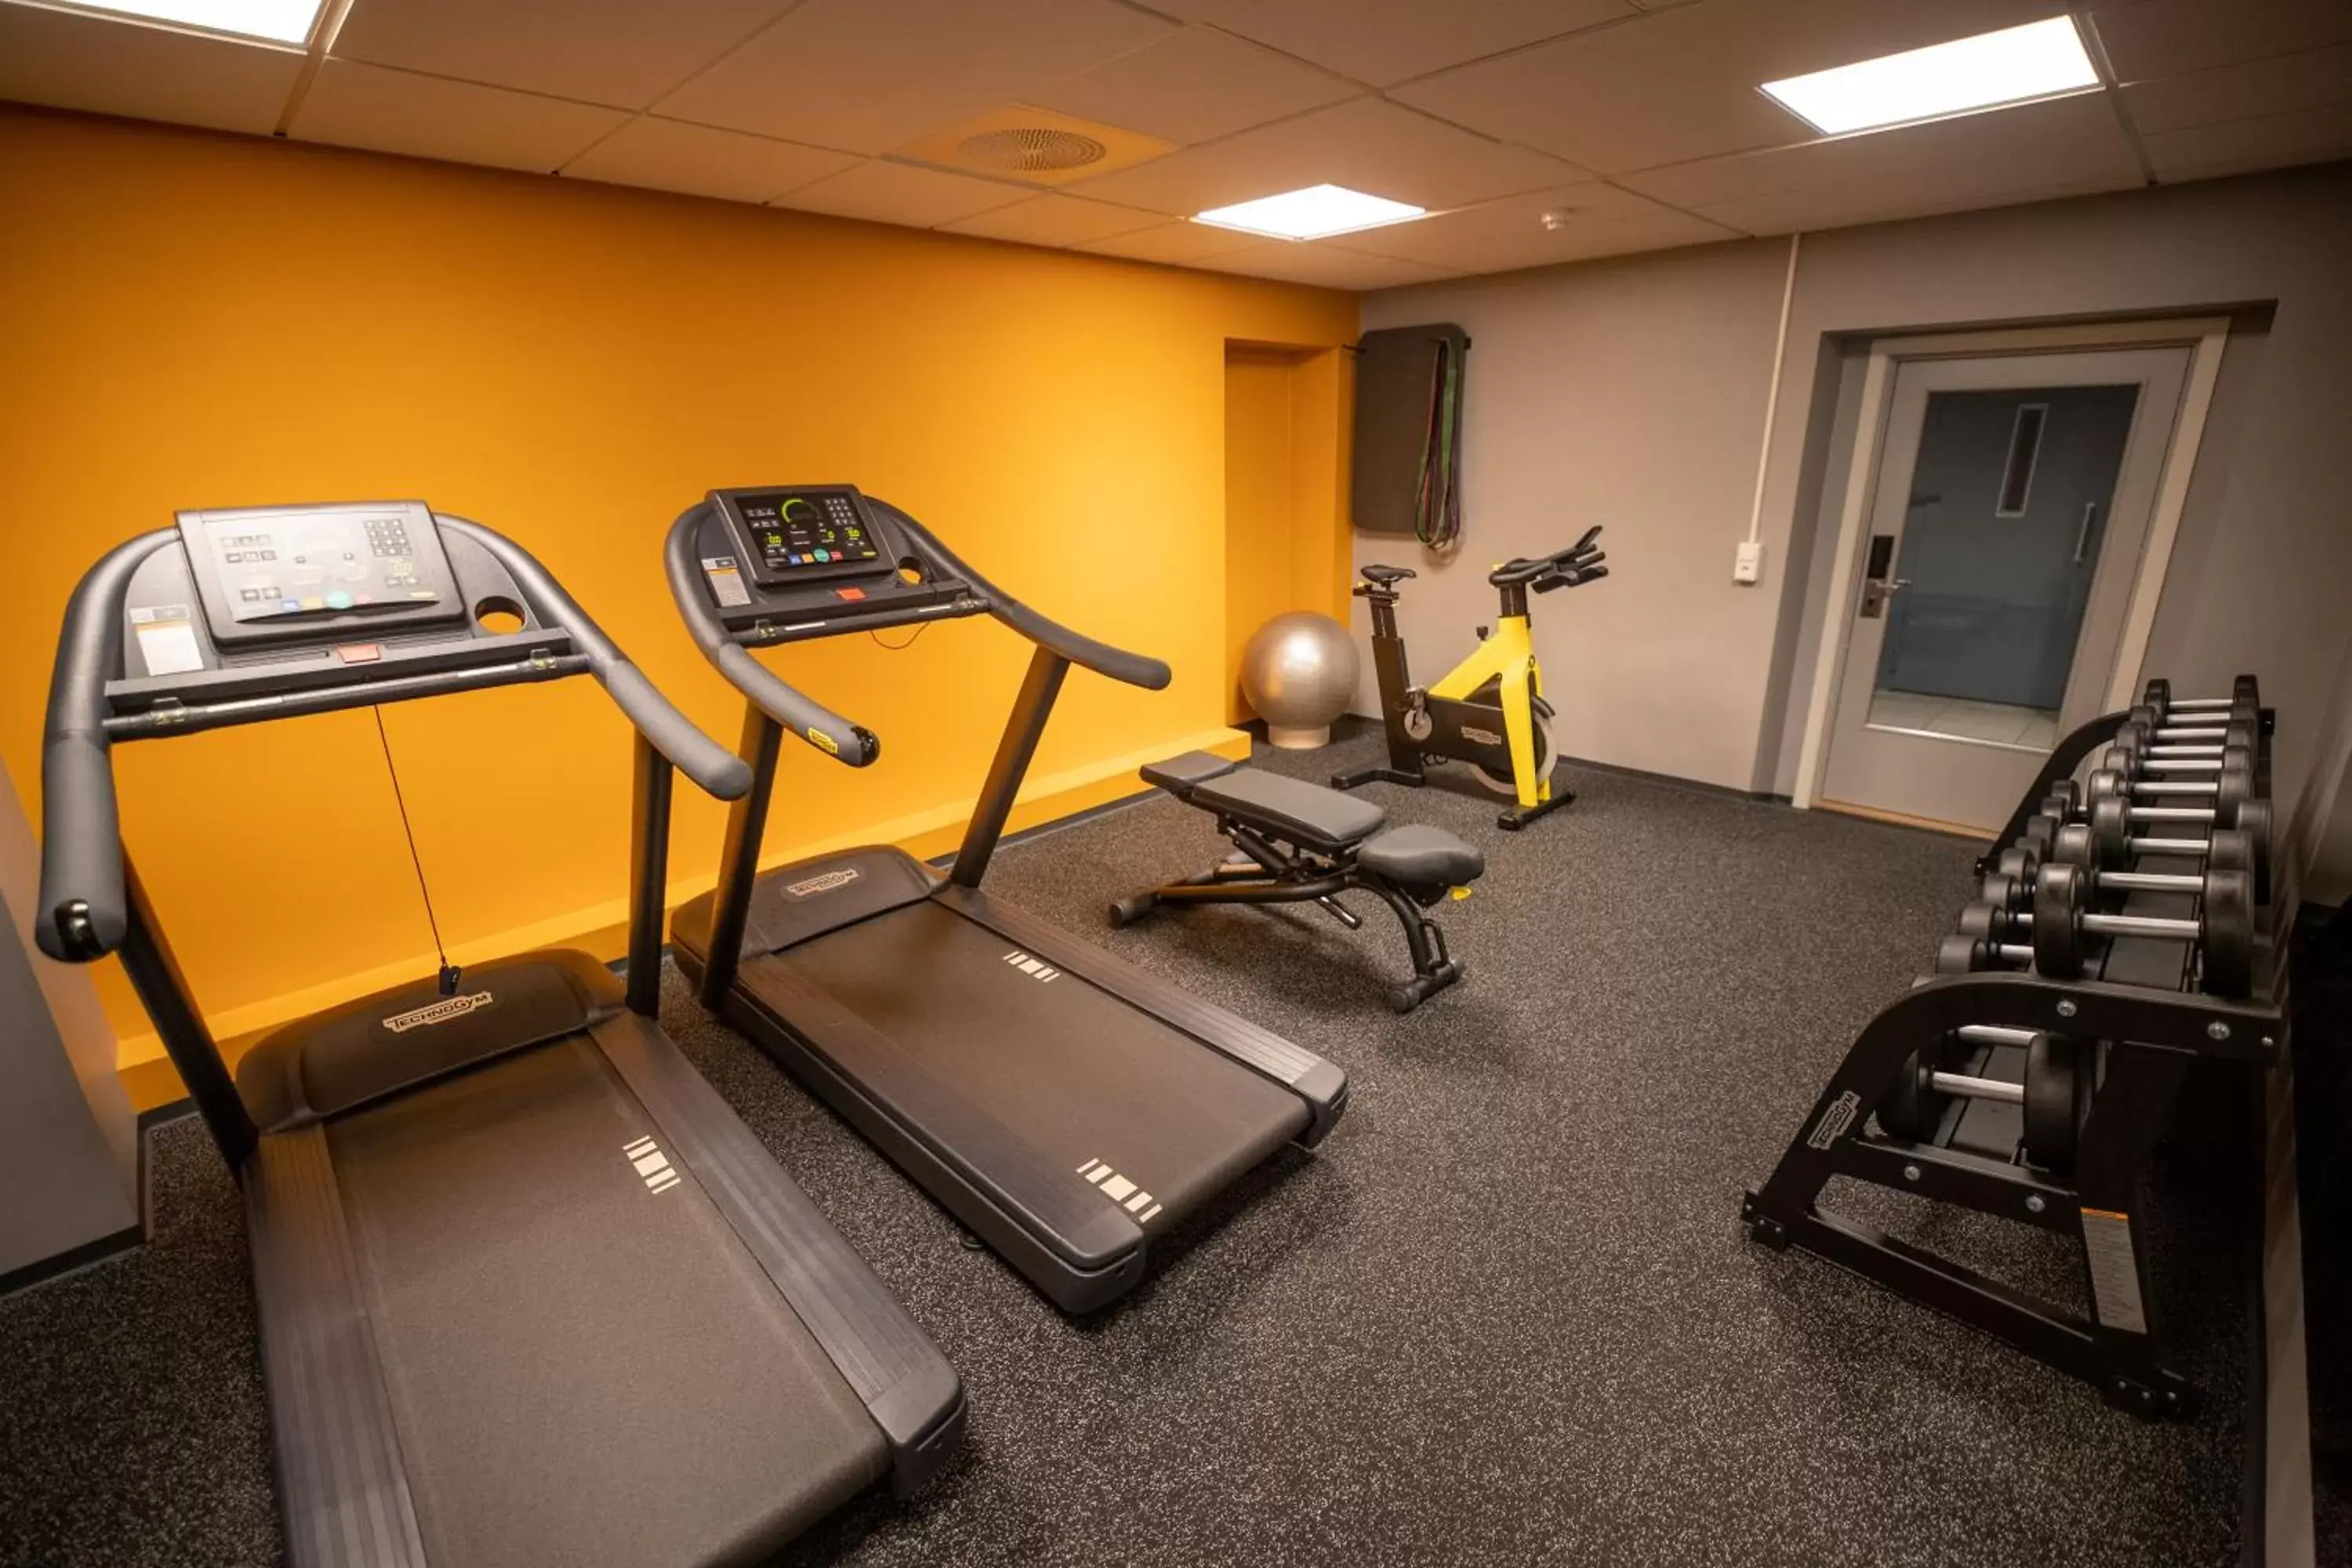 Fitness centre/facilities, Fitness Center/Facilities in Hotell Bondeheimen